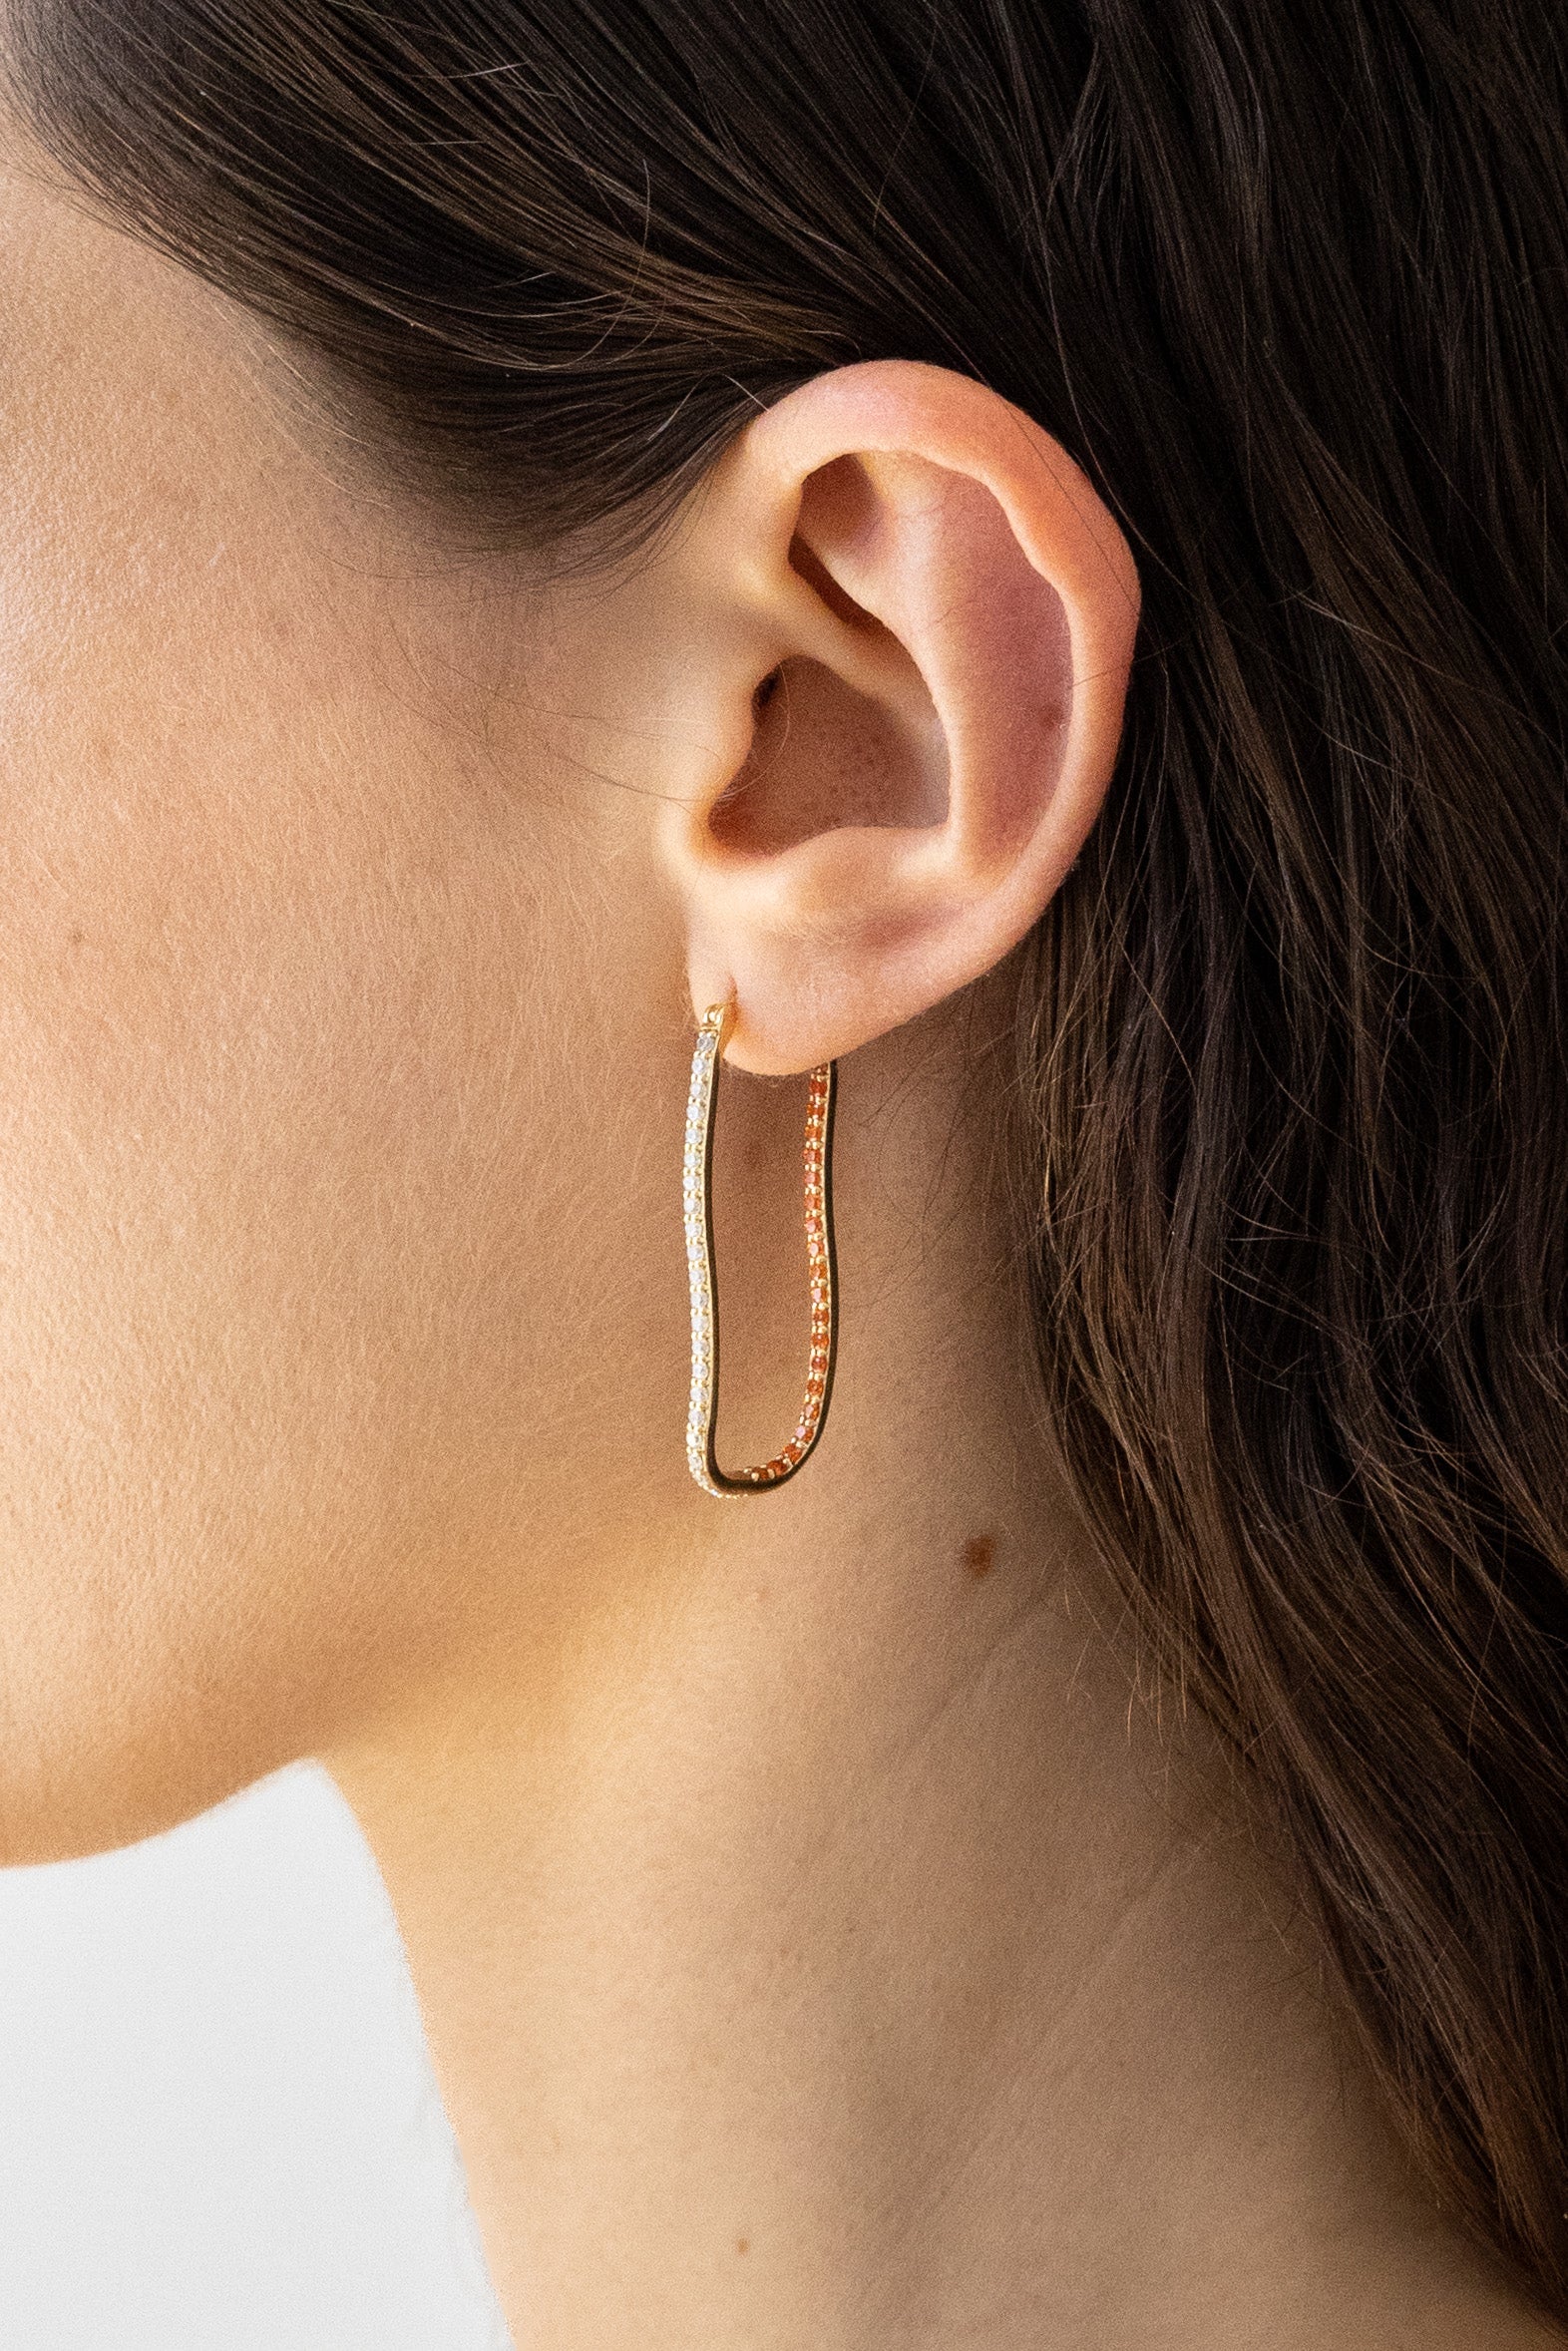 Flash Jewellery Fiasco Paved Hoop Earrings with Tangerine Gemstones in 14k Gold Vermeil on Model close up